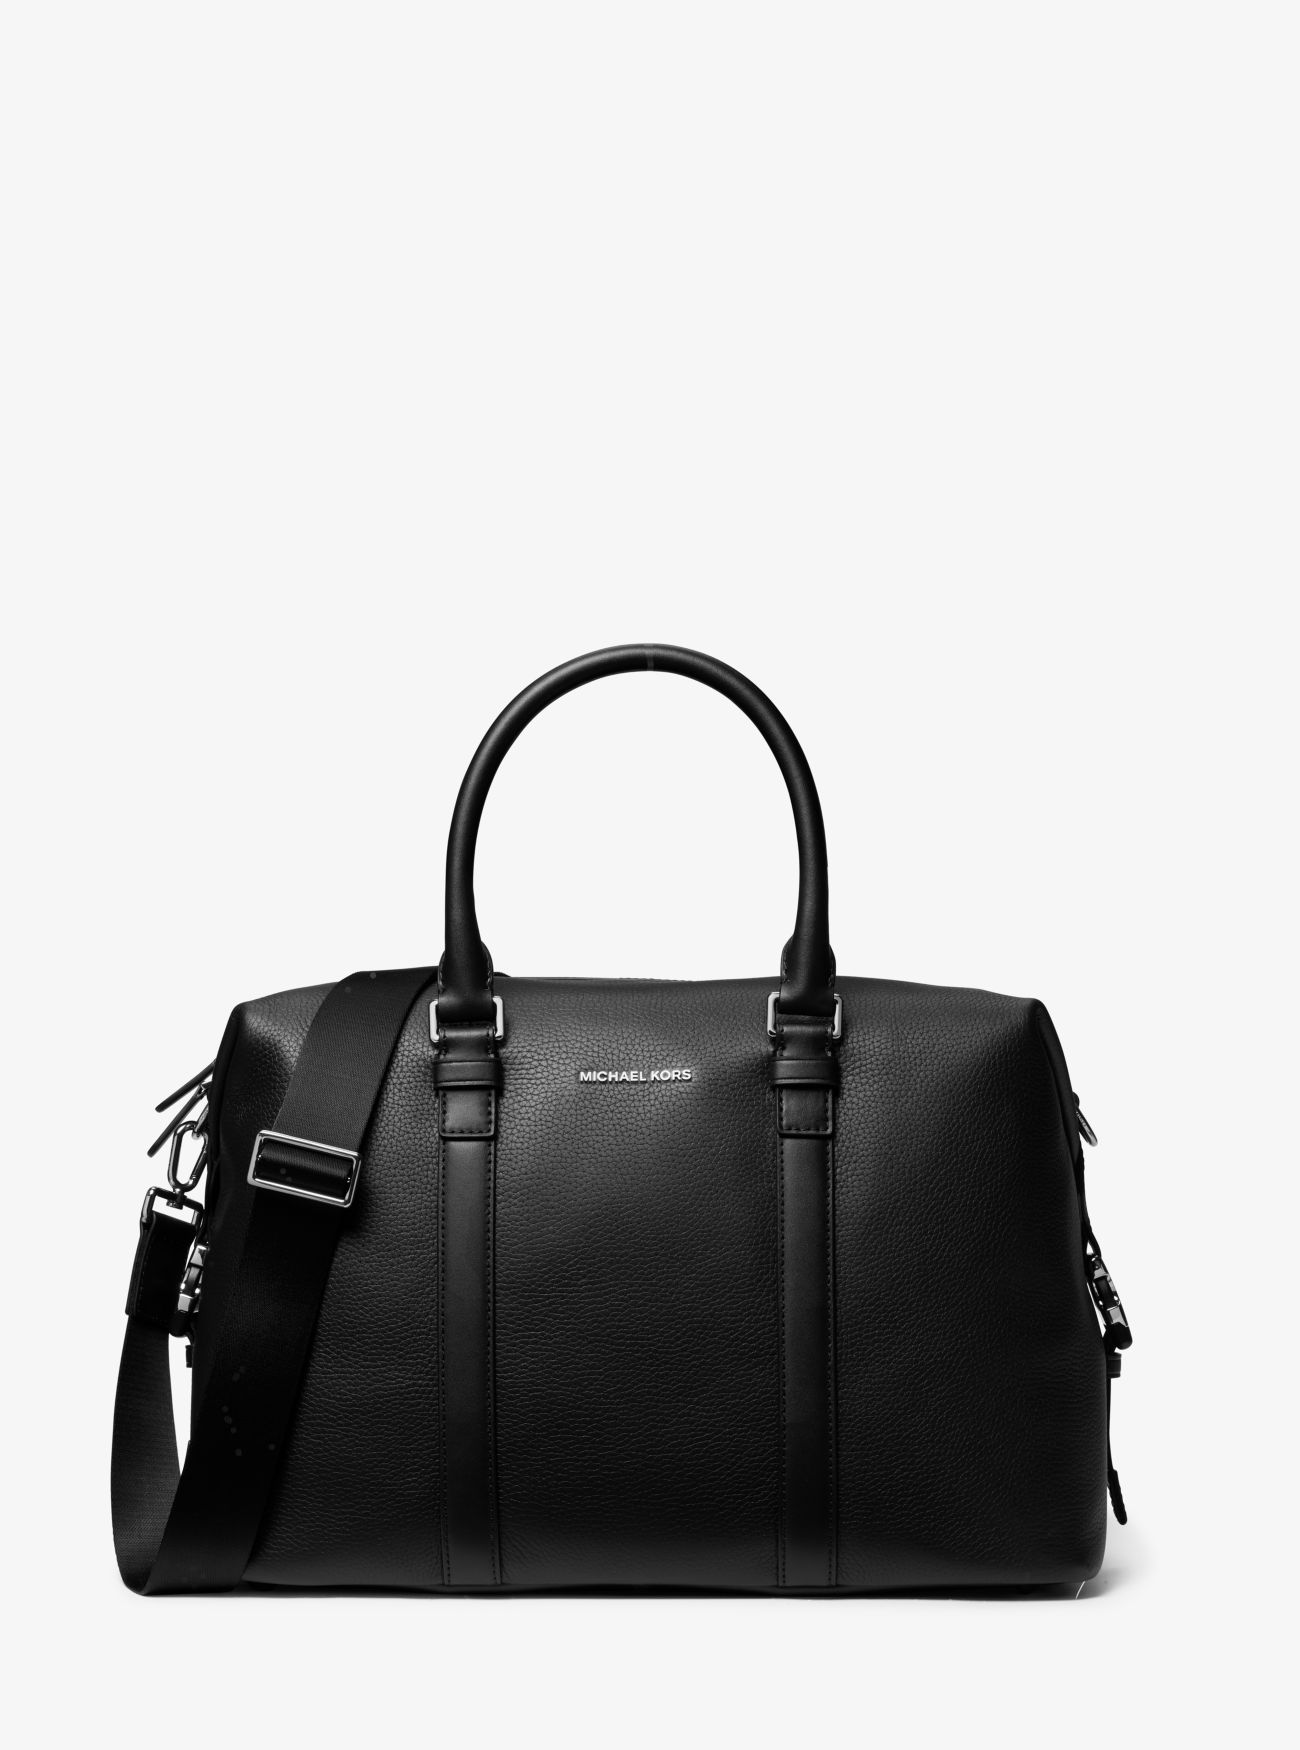 MK Hudson Medium Pebbled Leather Duffel Bag - Black - Michael Kors